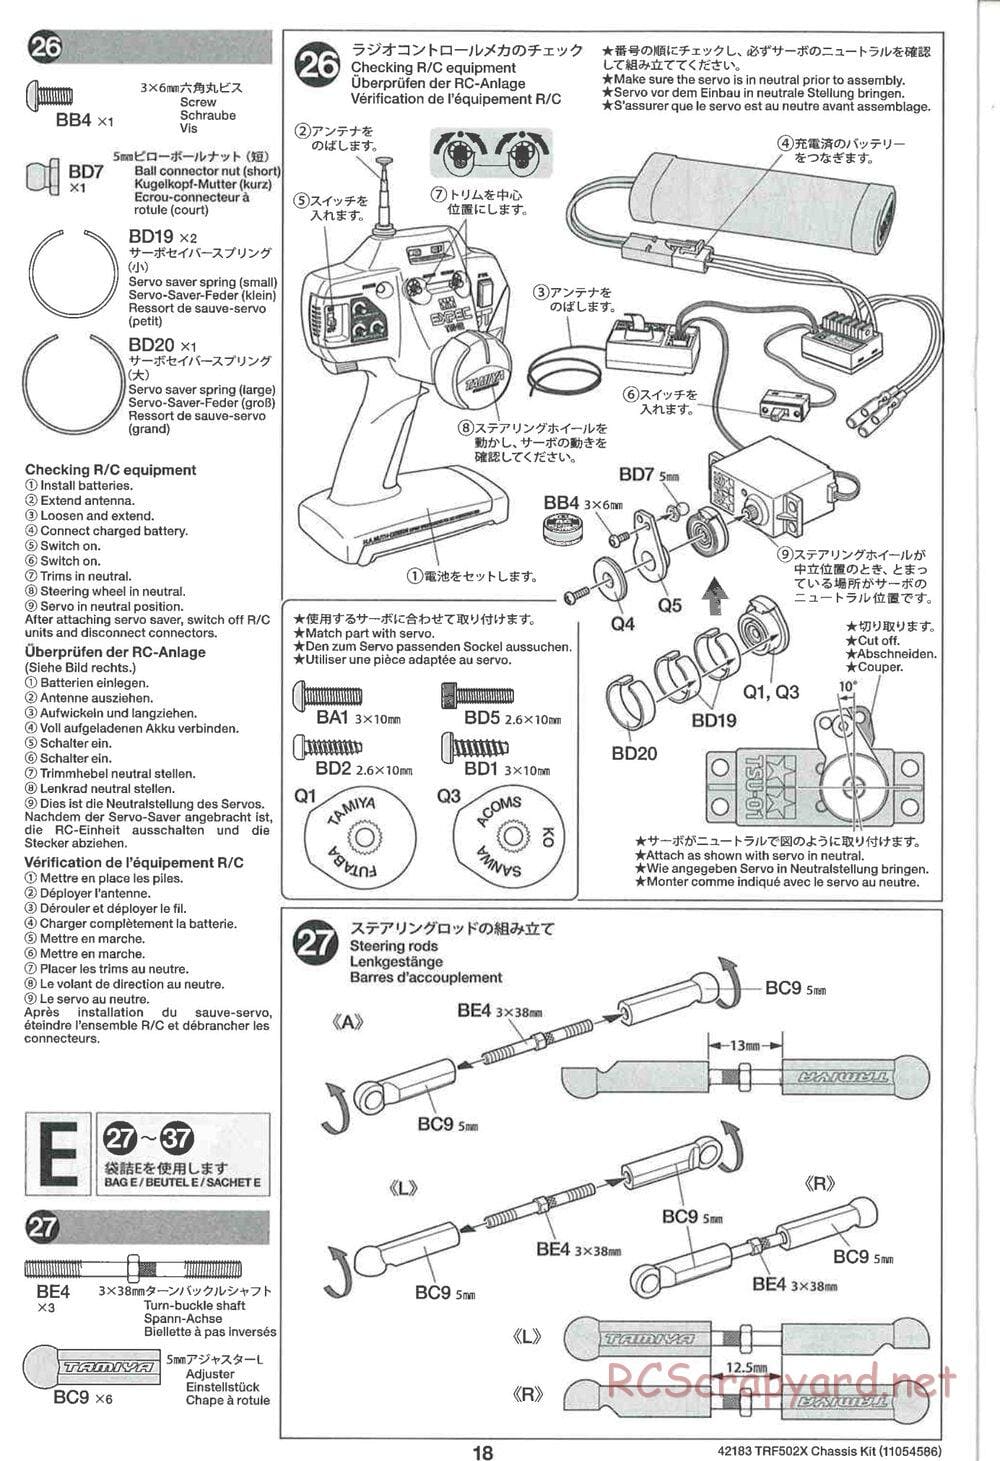 Tamiya - TRF502X Chassis - Manual - Page 18